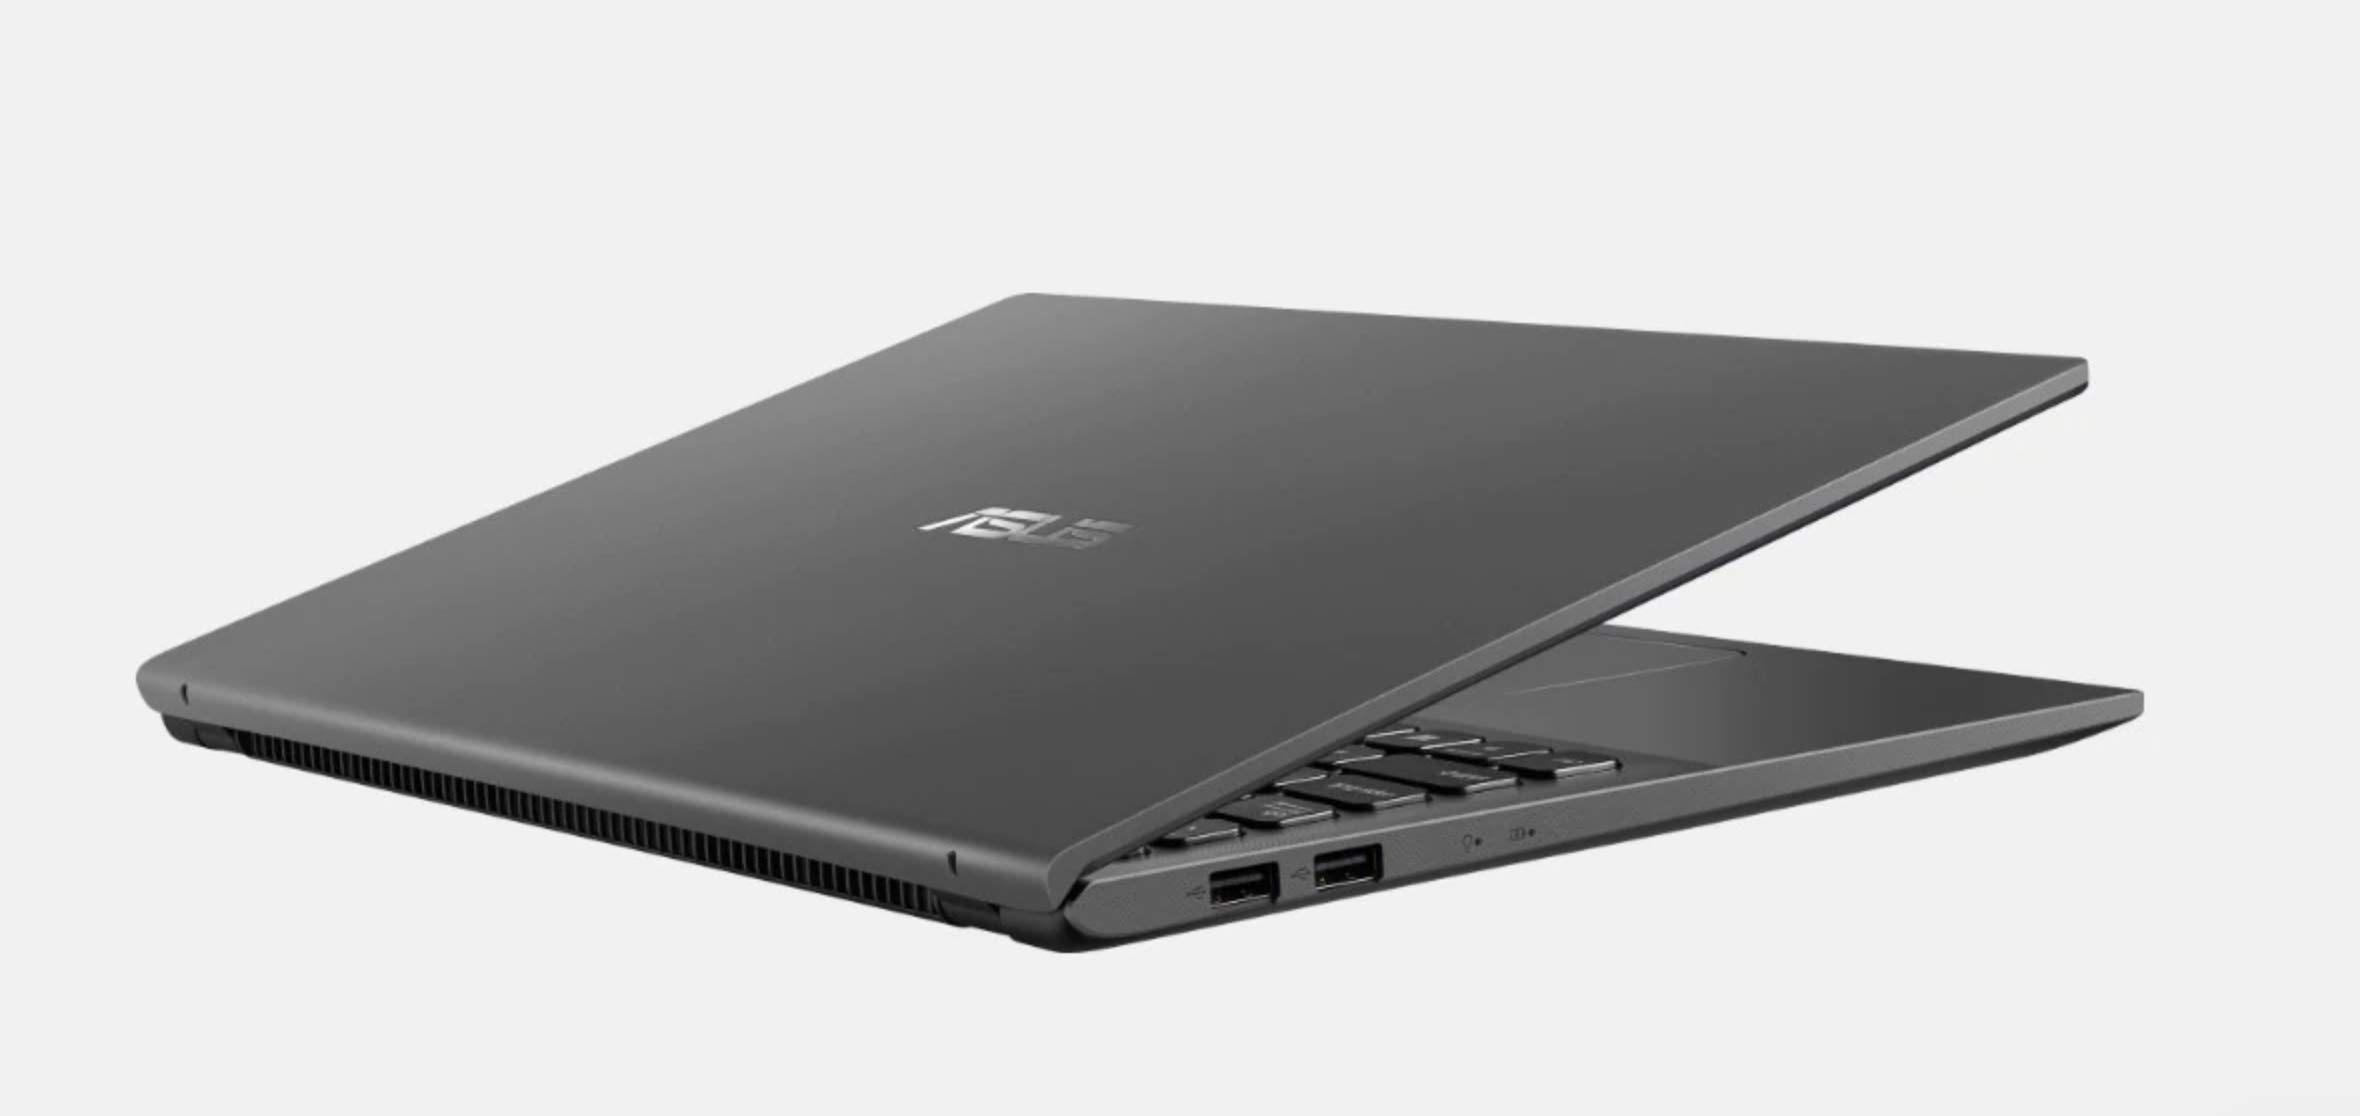 ASUS Premium VivoBook 2021 15.6" FHD Touchscreen Laptop Computer, Intel Core i3-1005G1 1.20 GHz(Beat i5-7200U), 8GB RAM, 128GB SSD, Webcam, Bluetooth, Wi-Fi, HDMI, Windows 10 S | VATTE HDMI Cable